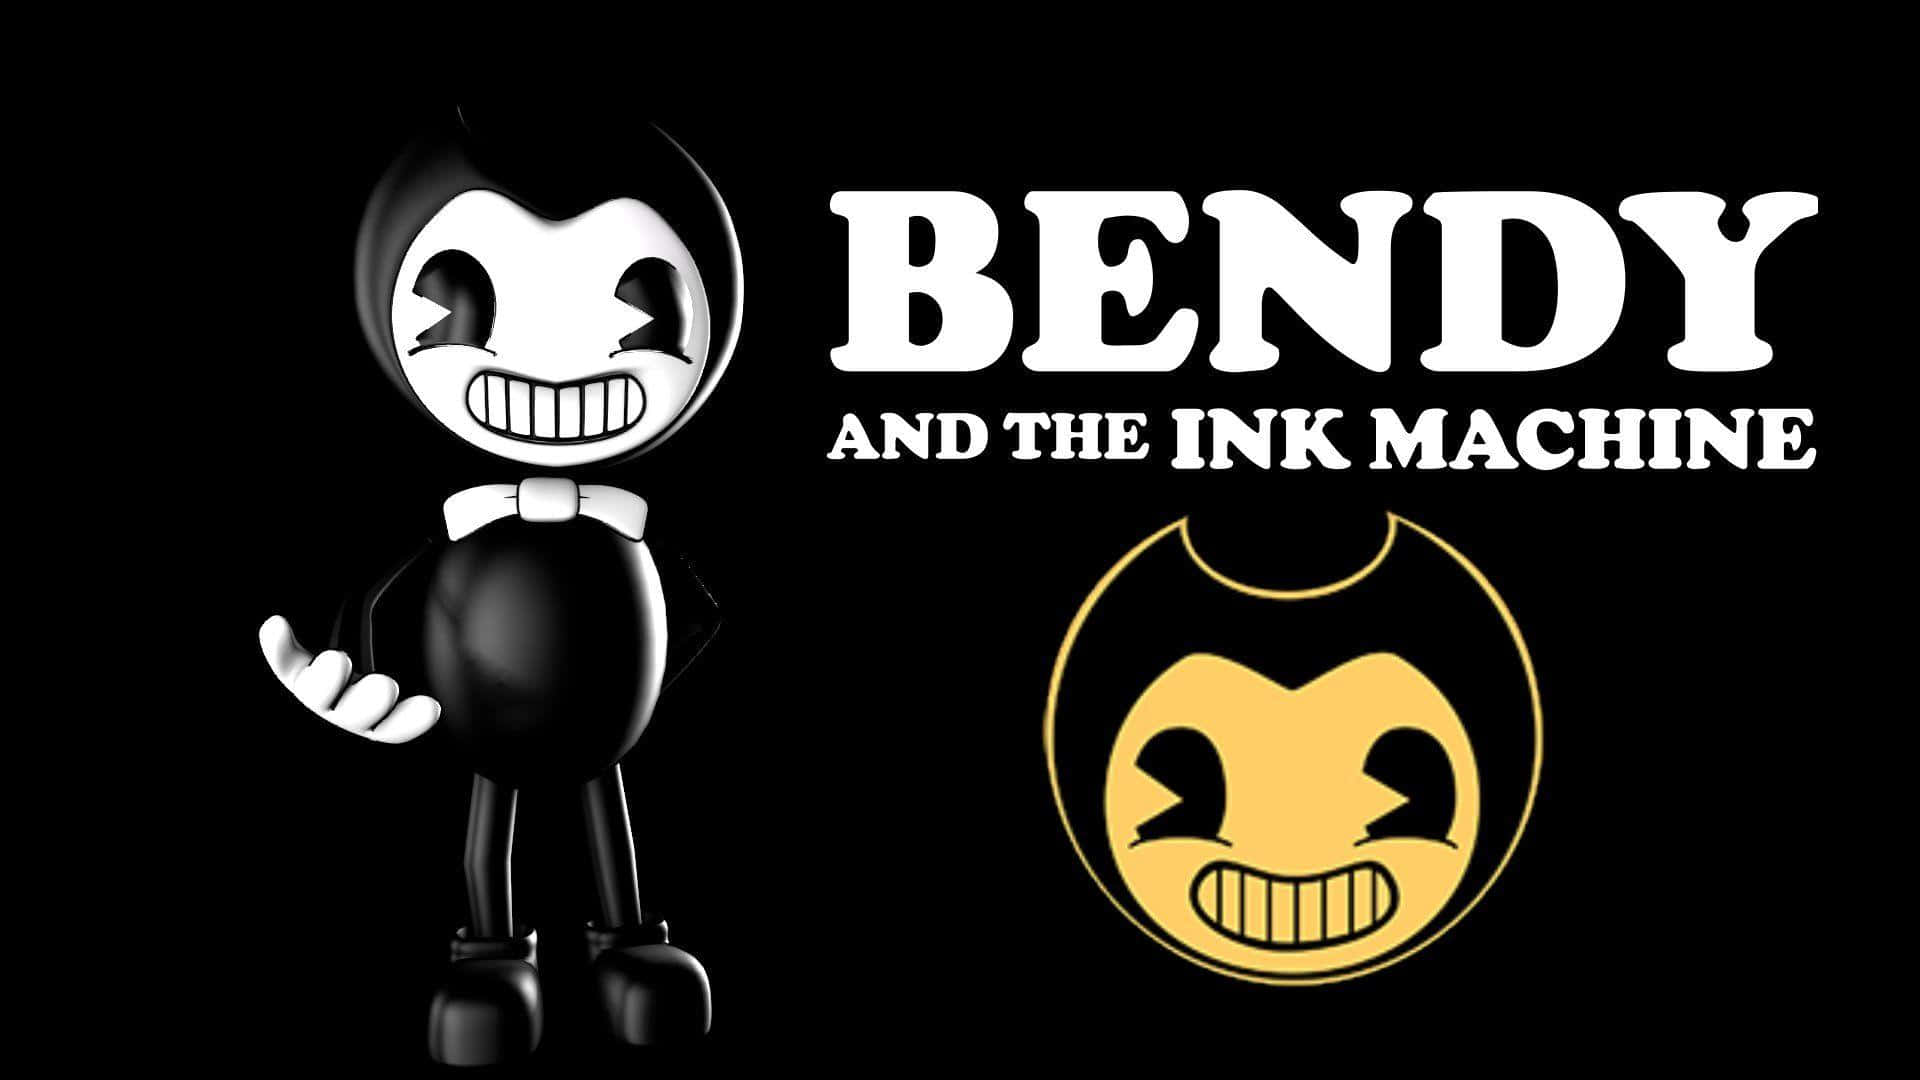 Bendy and the Ink Machine BATIM wallpaper  Bendy and the ink machine  Ink Machine logo